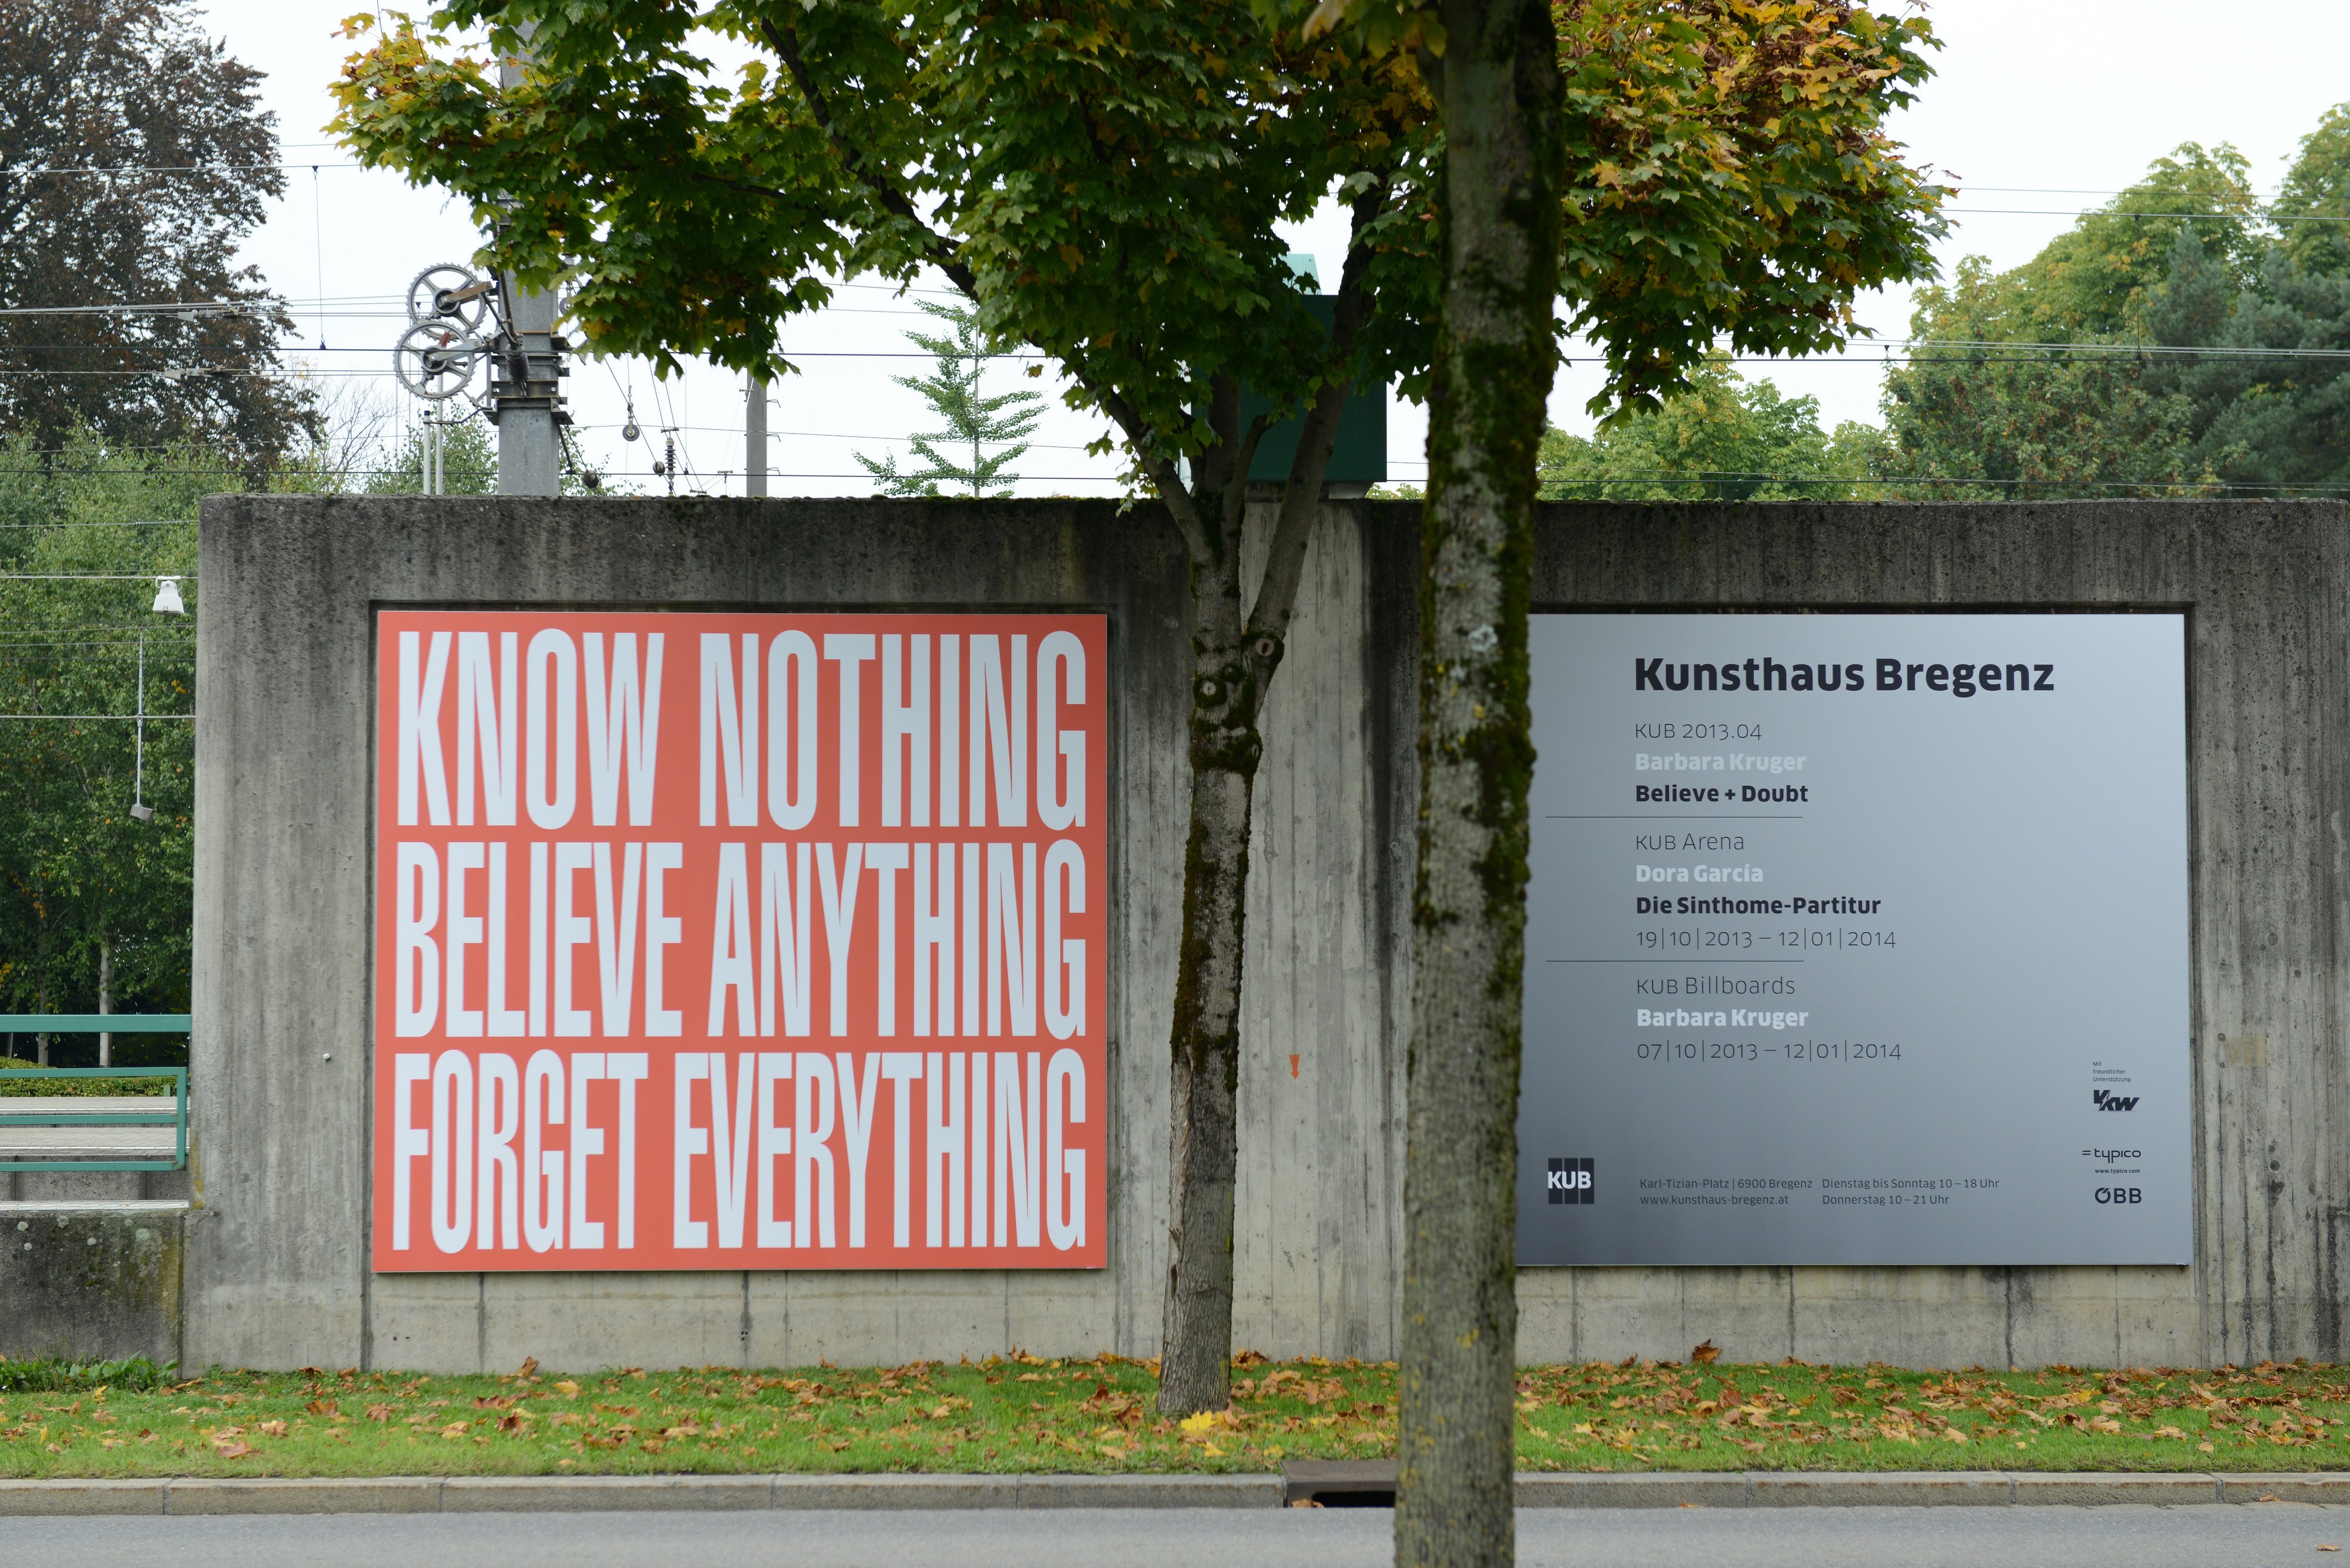 arbara Kruger. Untitled (Know nothing, believe anything, forget everything) KUB Billboards, Seestraße, Bregenz. Photo: Rudolf Sagmeister. 2013. Source: contemporaryartdaily.com